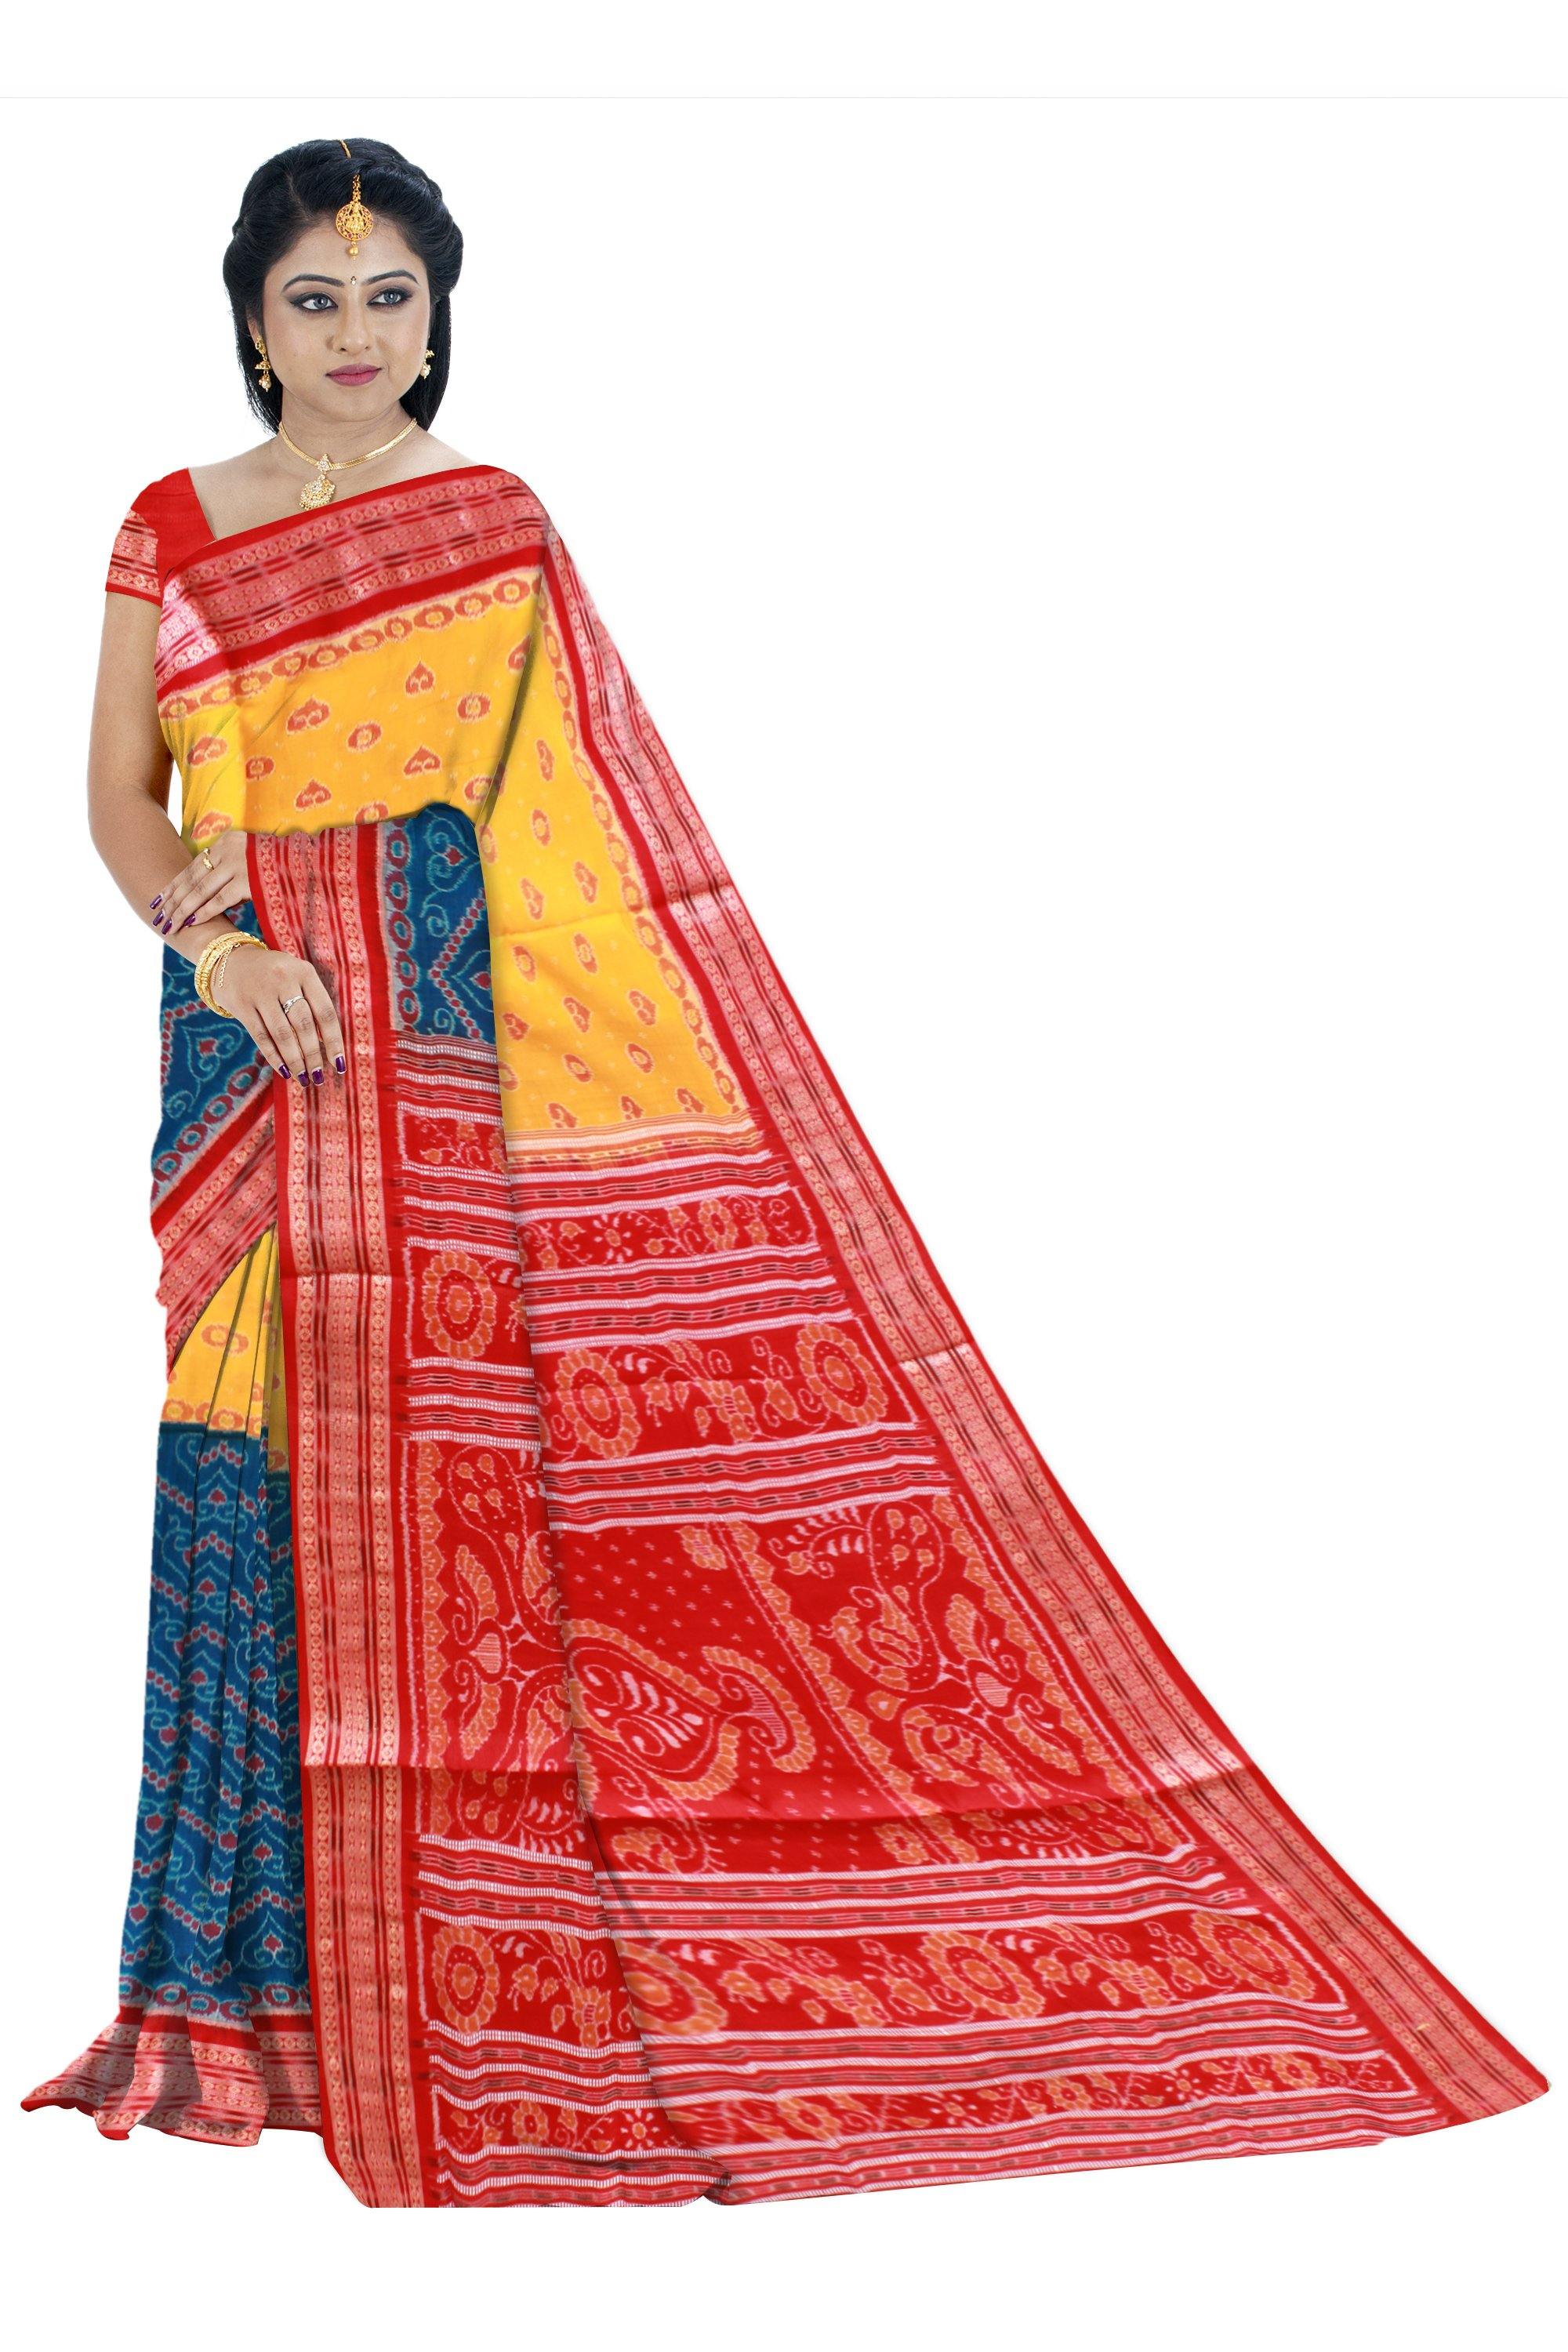 2D design Heart print Sambalpuri saree in Blue and yellow Color With blouse piece. - Koshali Arts & Crafts Enterprise